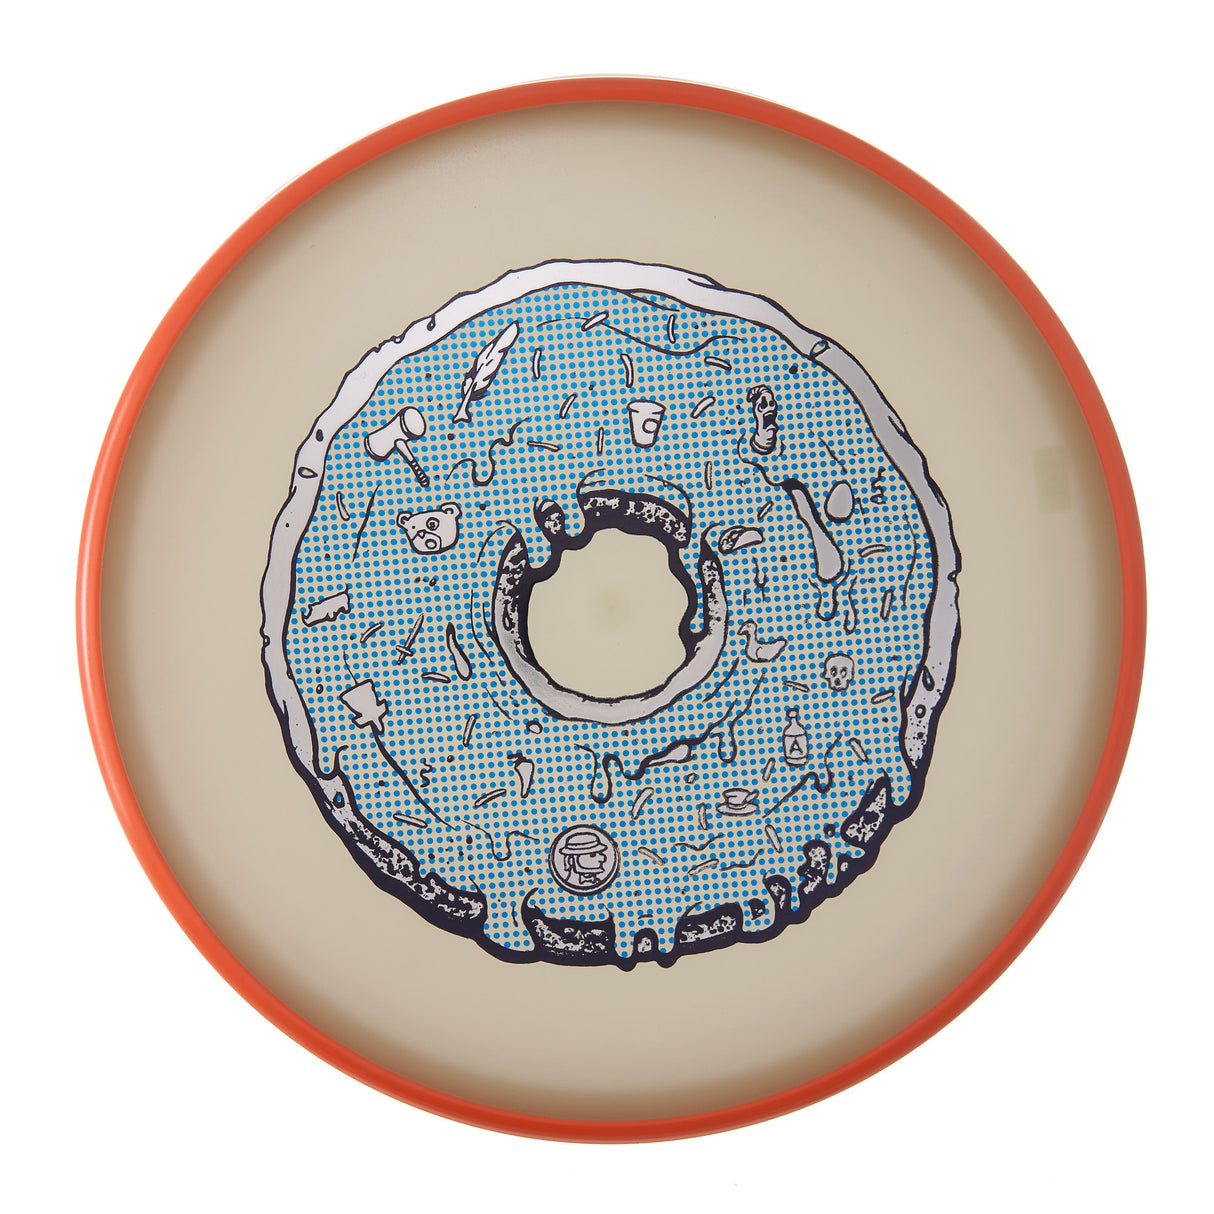 Axiom Proxy - DFX Donut Eclipse 2.0 173g | Style 0032